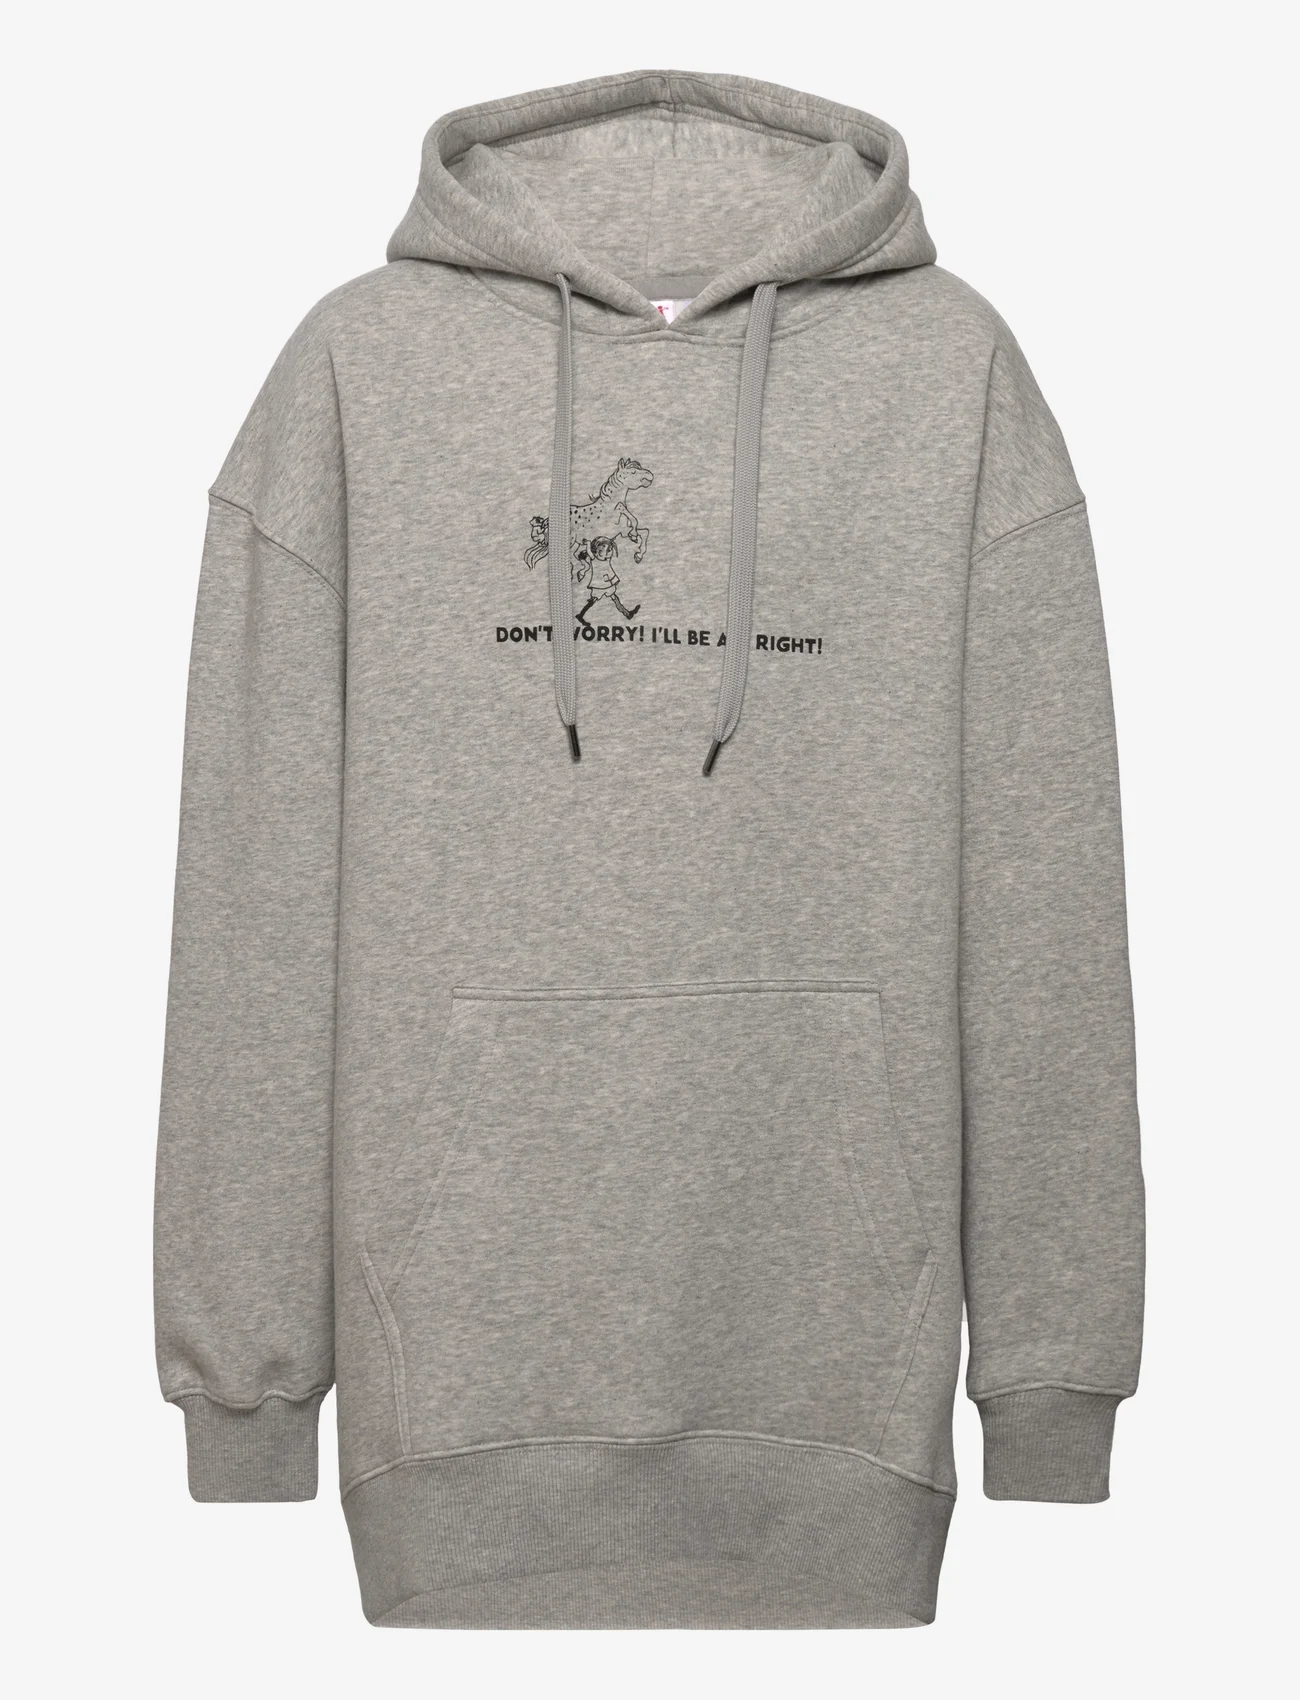 Martinex - ELLA HOODIE PIPPI - sweatshirts & hoodies - gray - 0